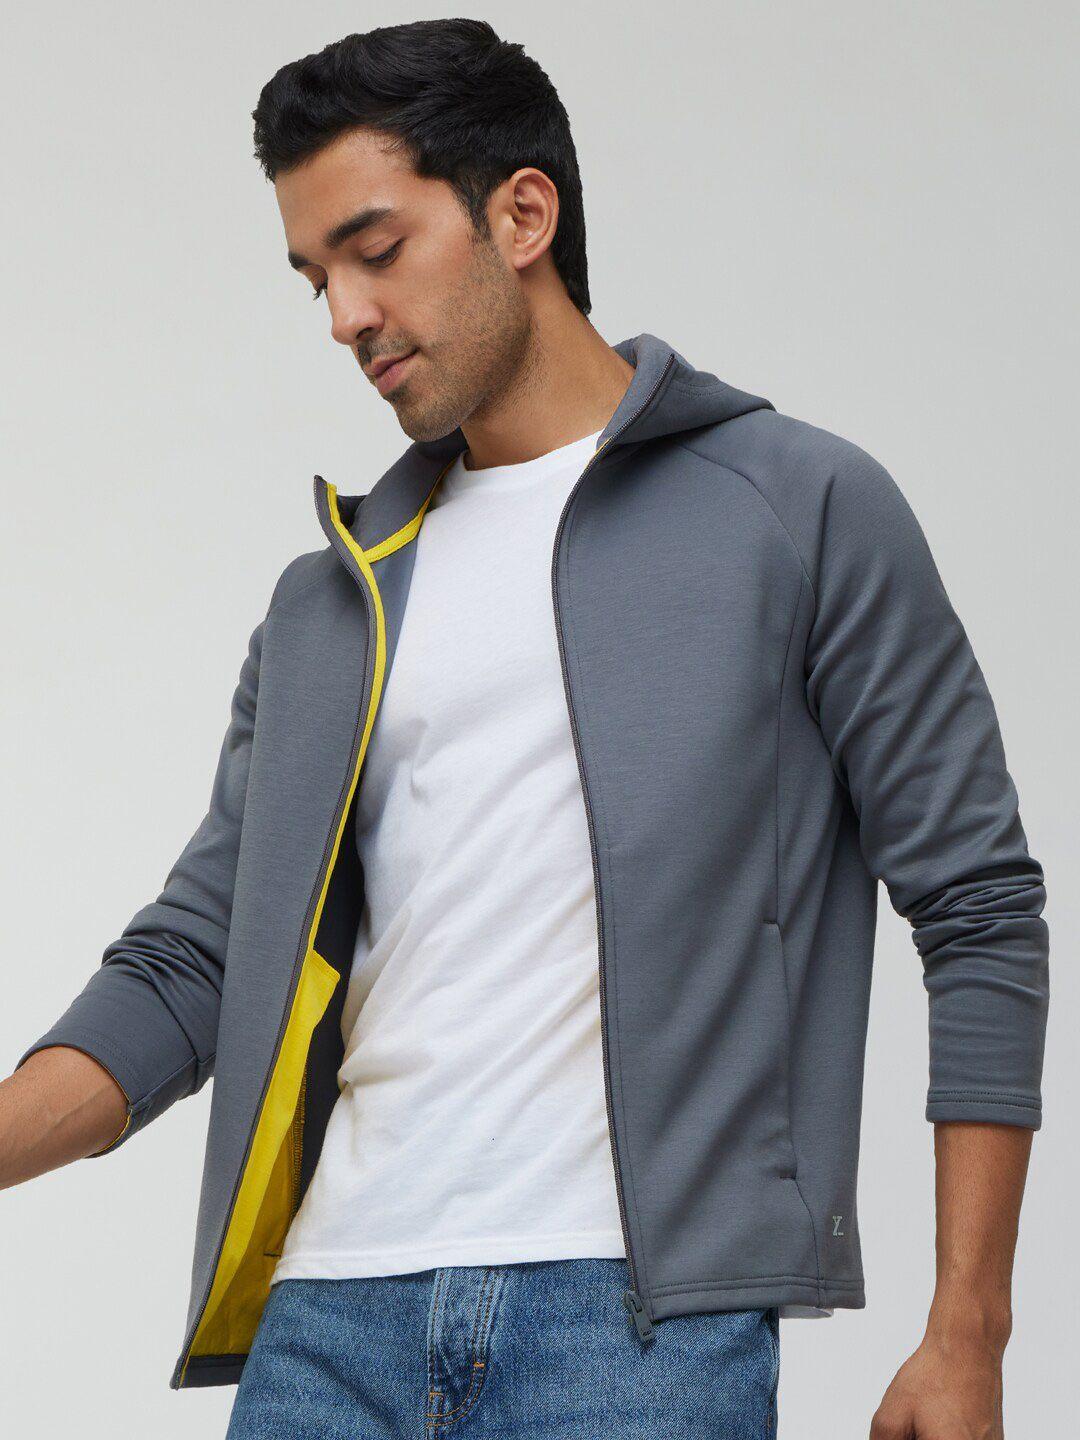 xyxx long sleeves hooded cotton front-open sweatshirt